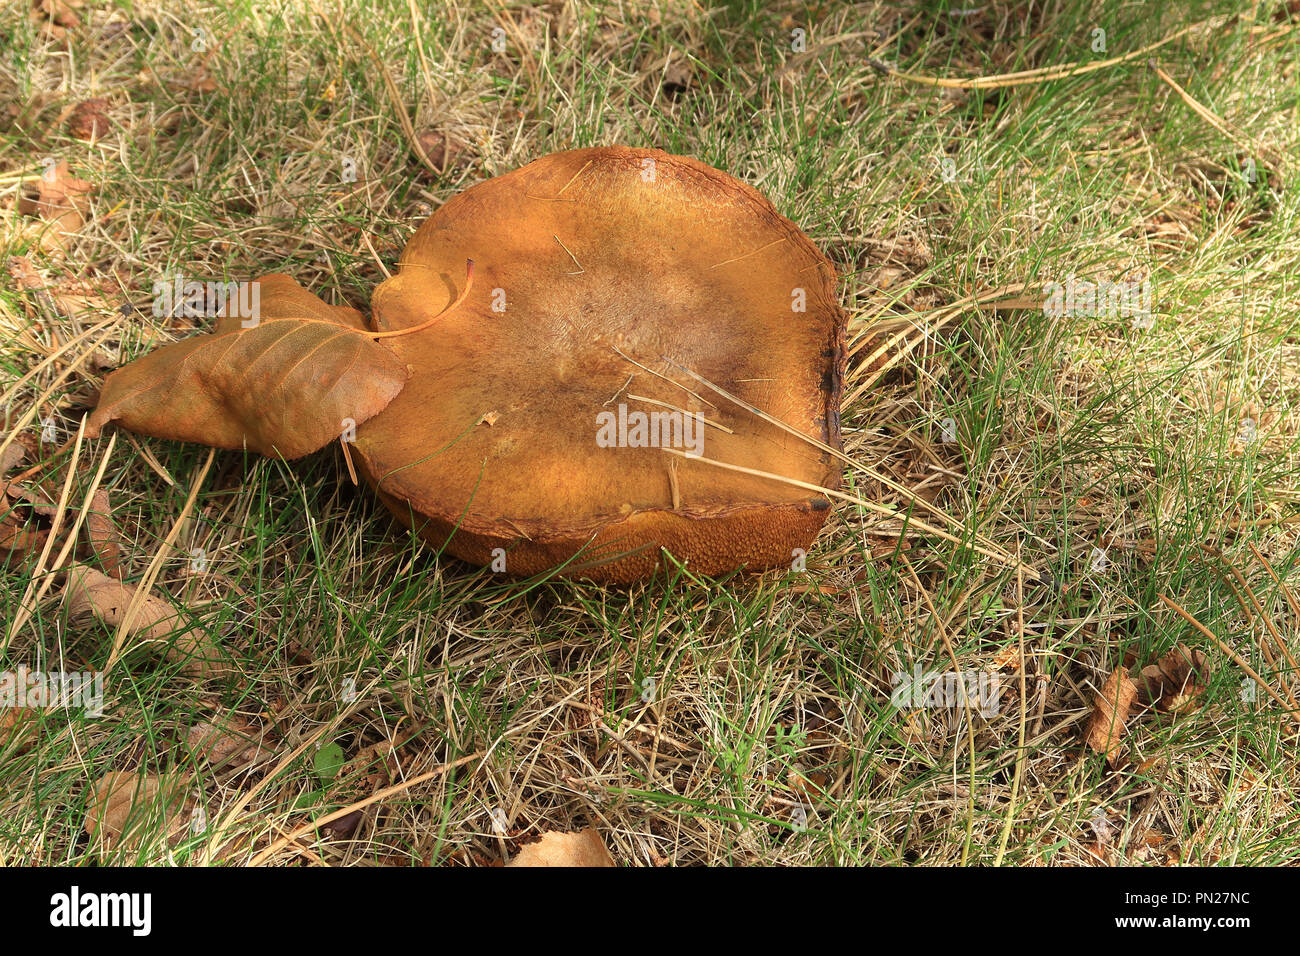 Suillus Bovinus  or Jersey cow mushroom in the grass Stock Photo